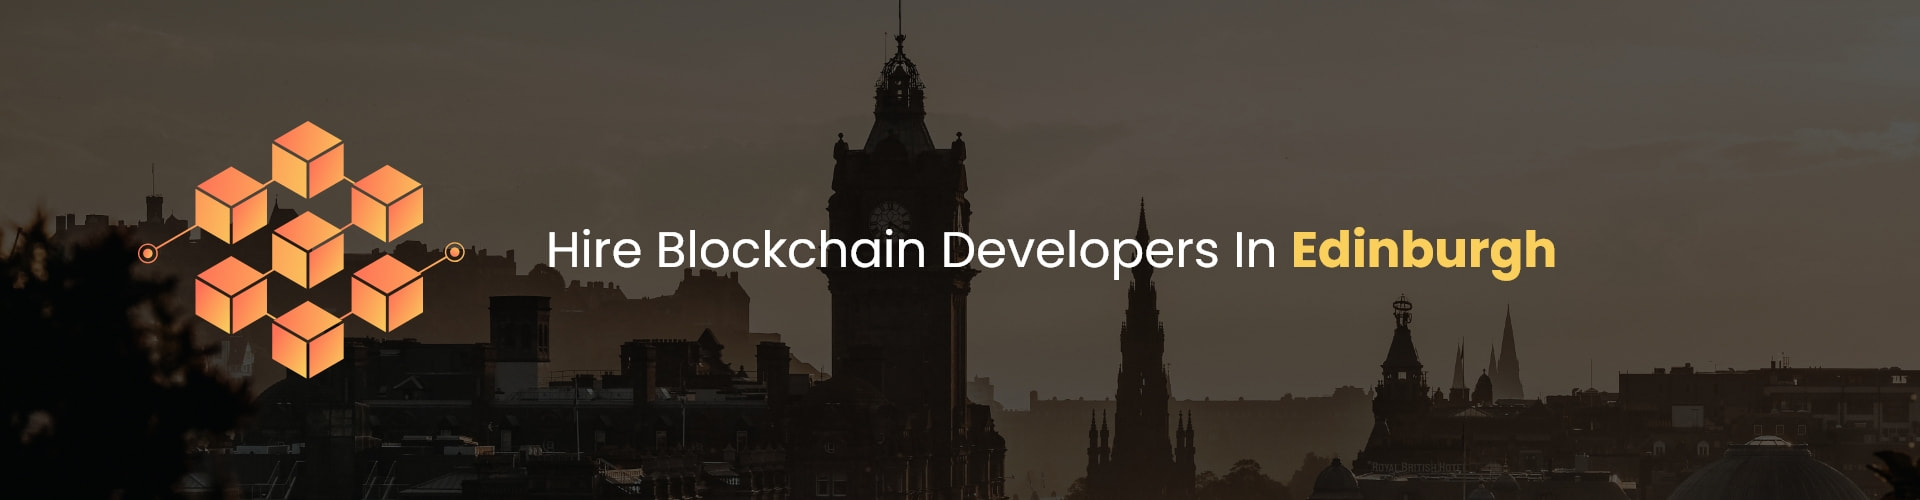 hire blockchain developers in edinburgh